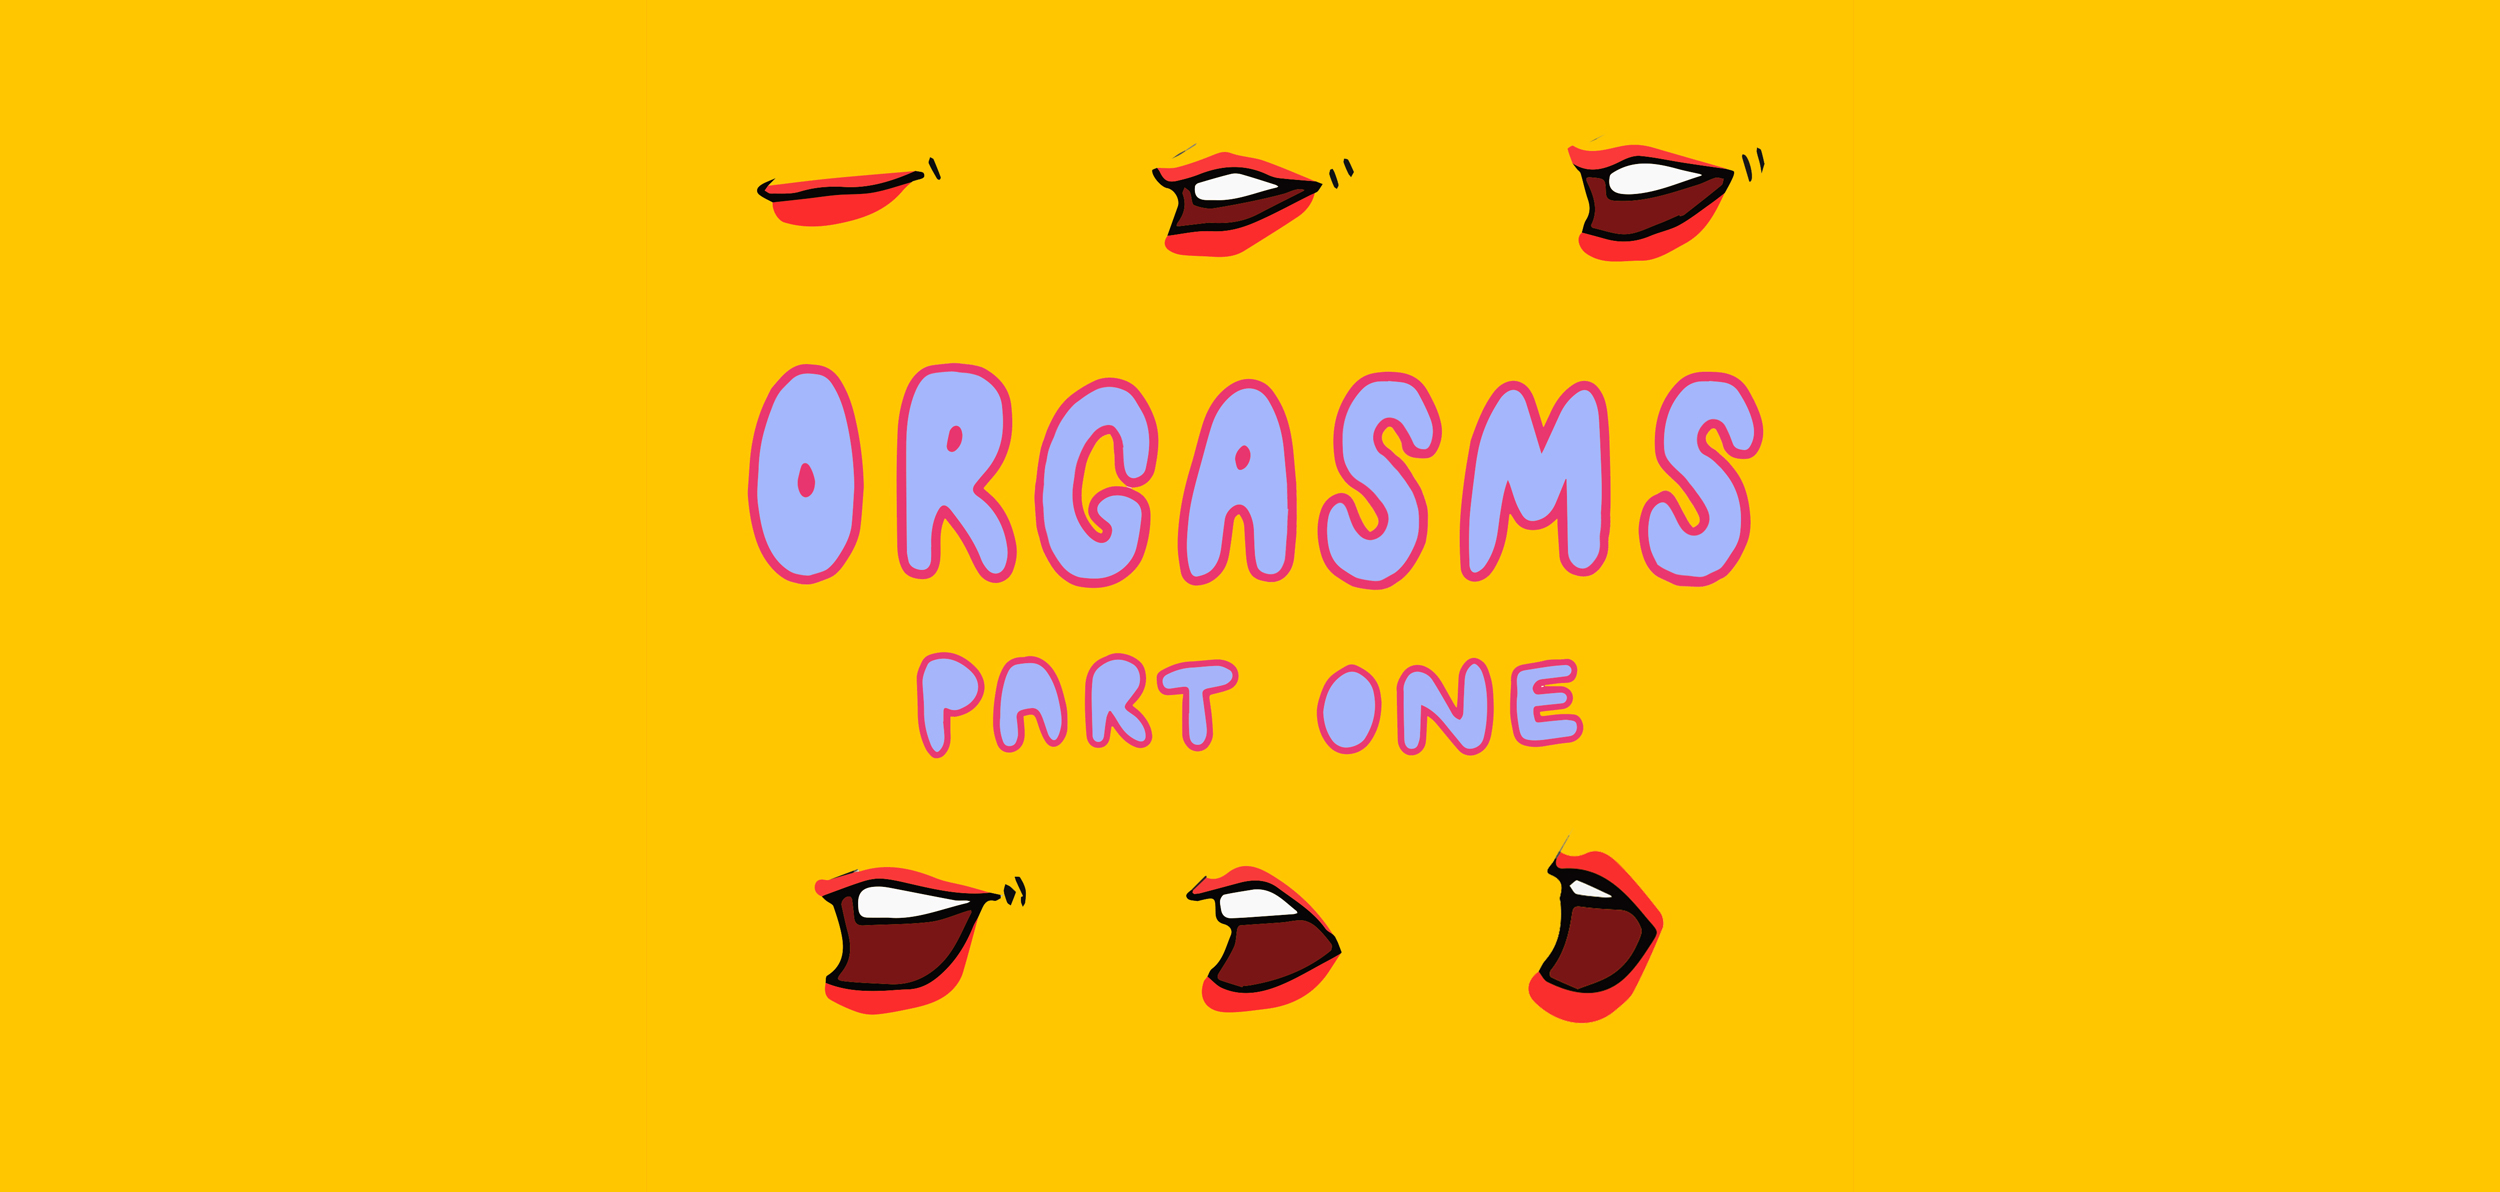 Female Orgasms 101 — The Sex Ed